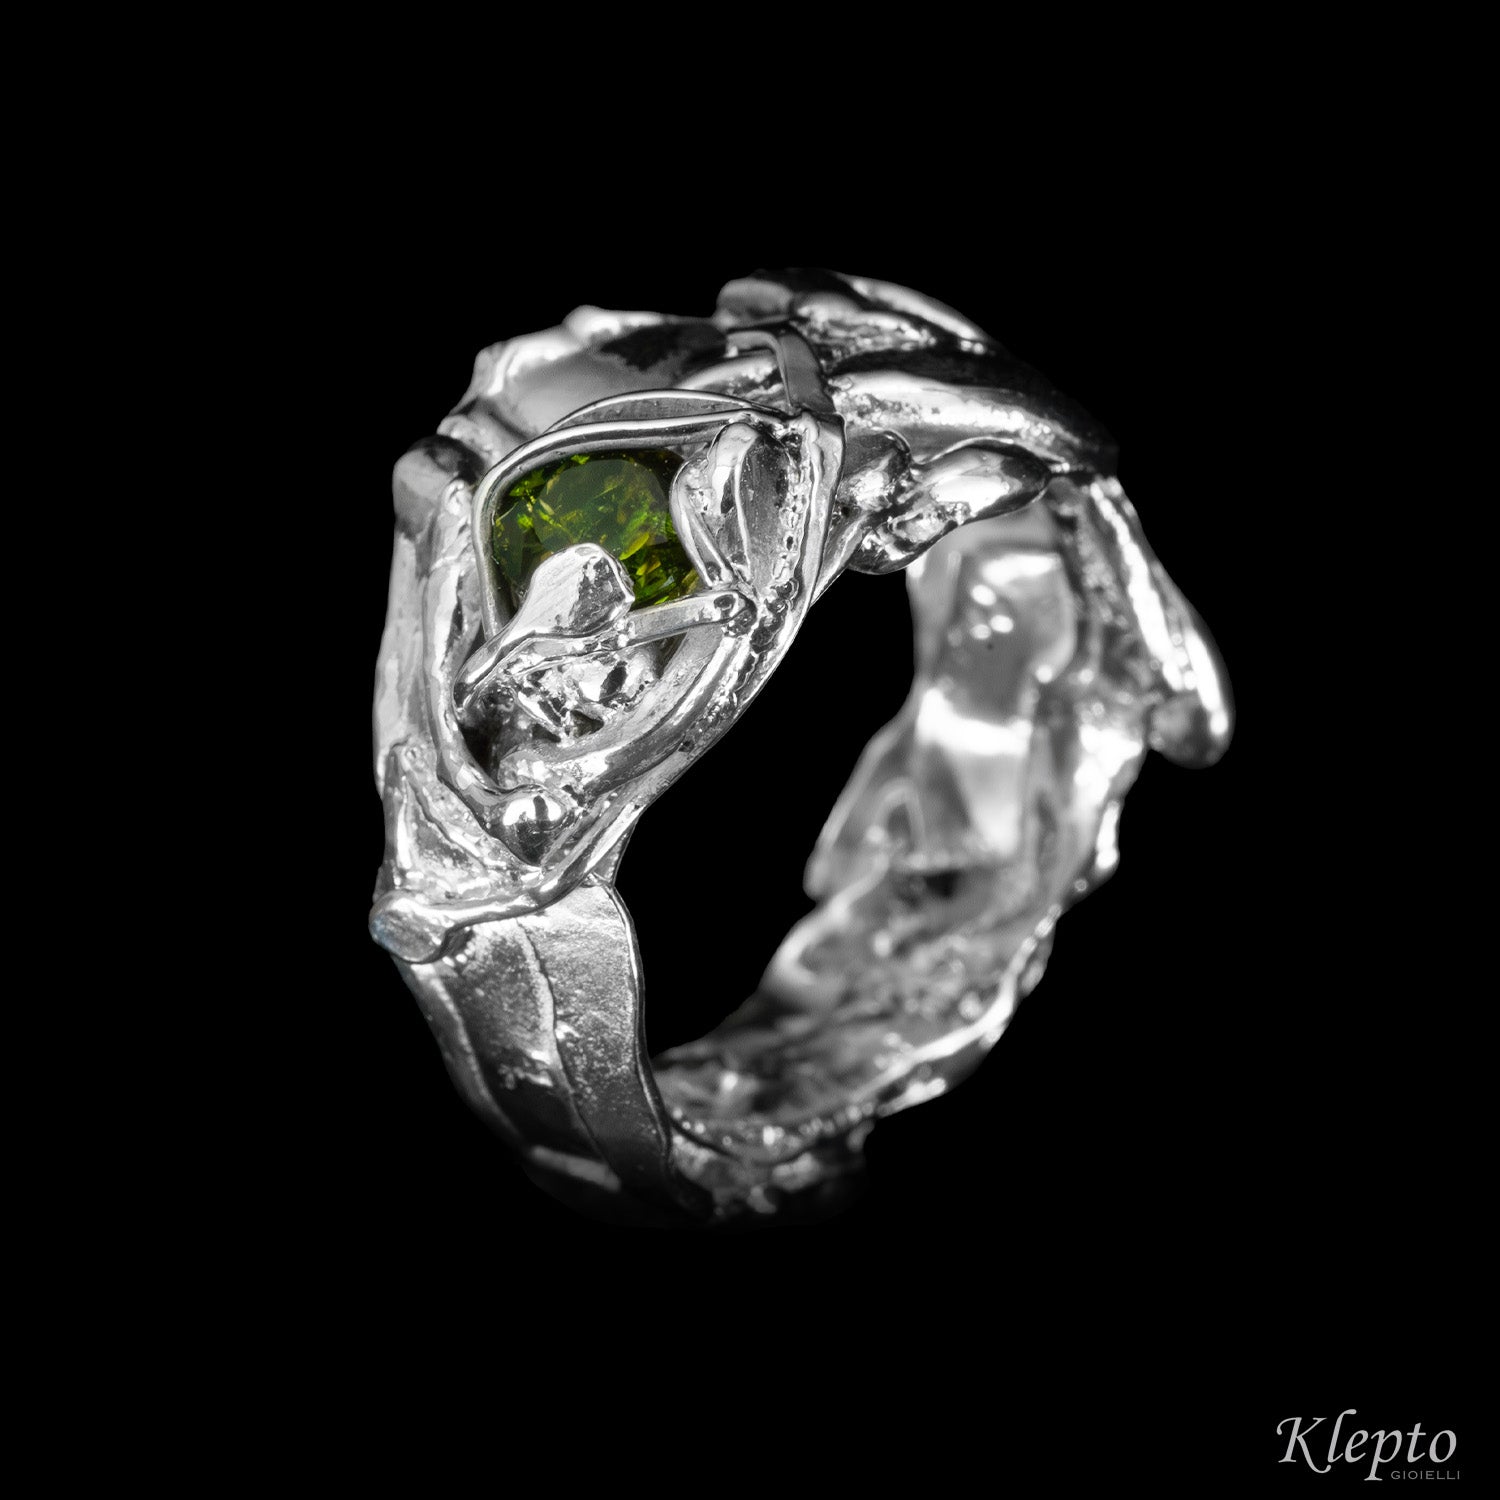 Silnova® Silver Ring with Green Tourmaline